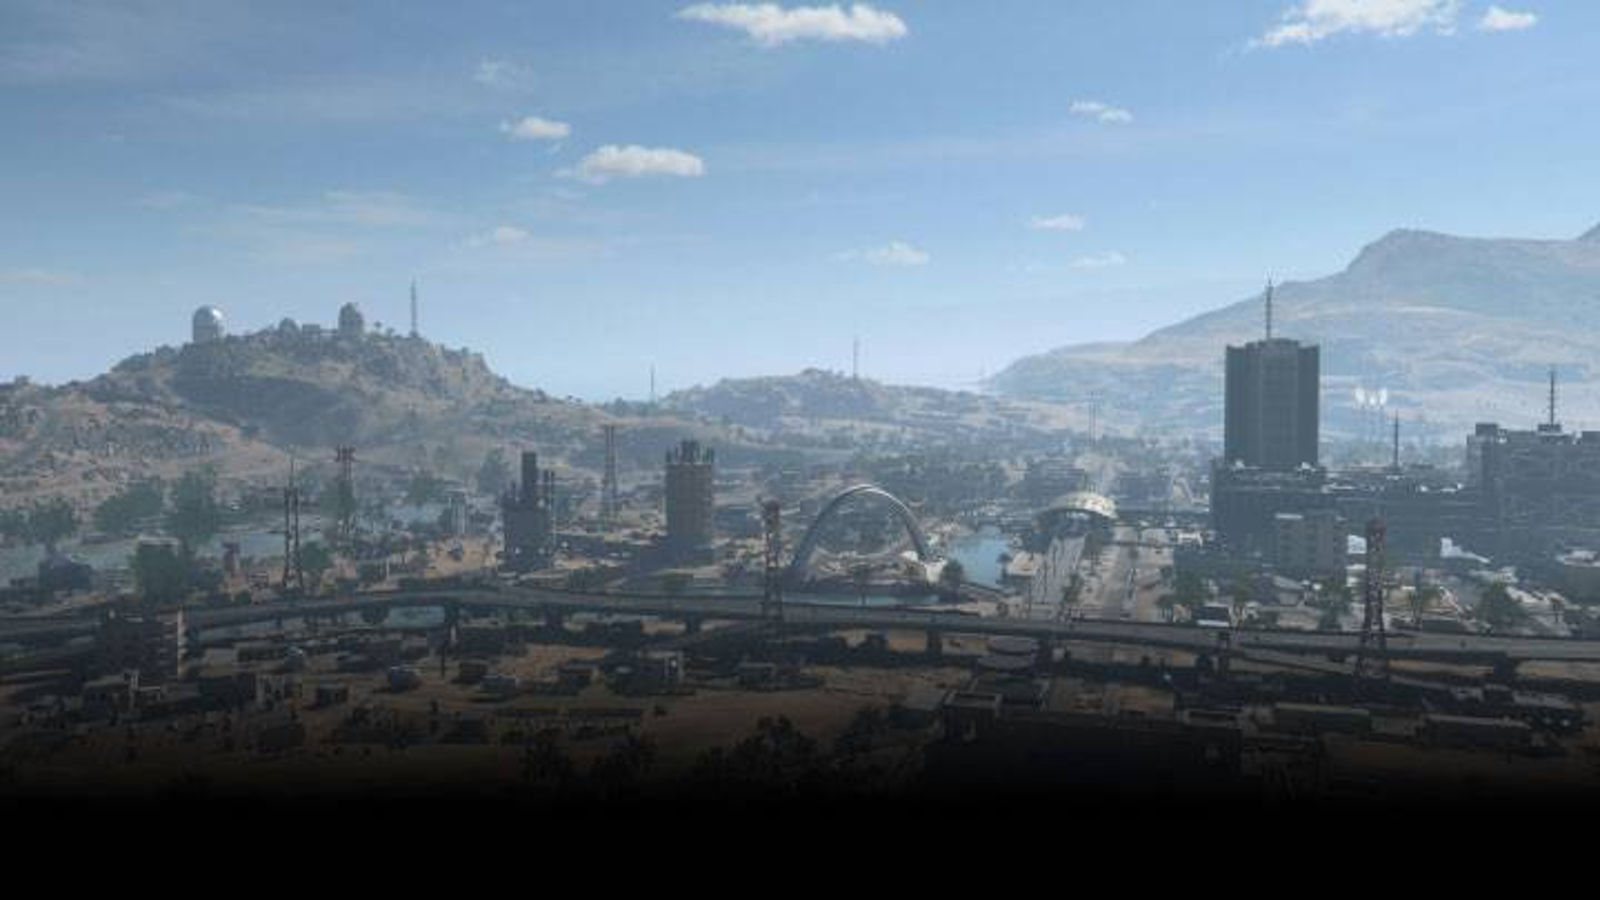 Warzone 2.0: como fazer o download do novo mapa free-to-play de Call of  Duty na PS4